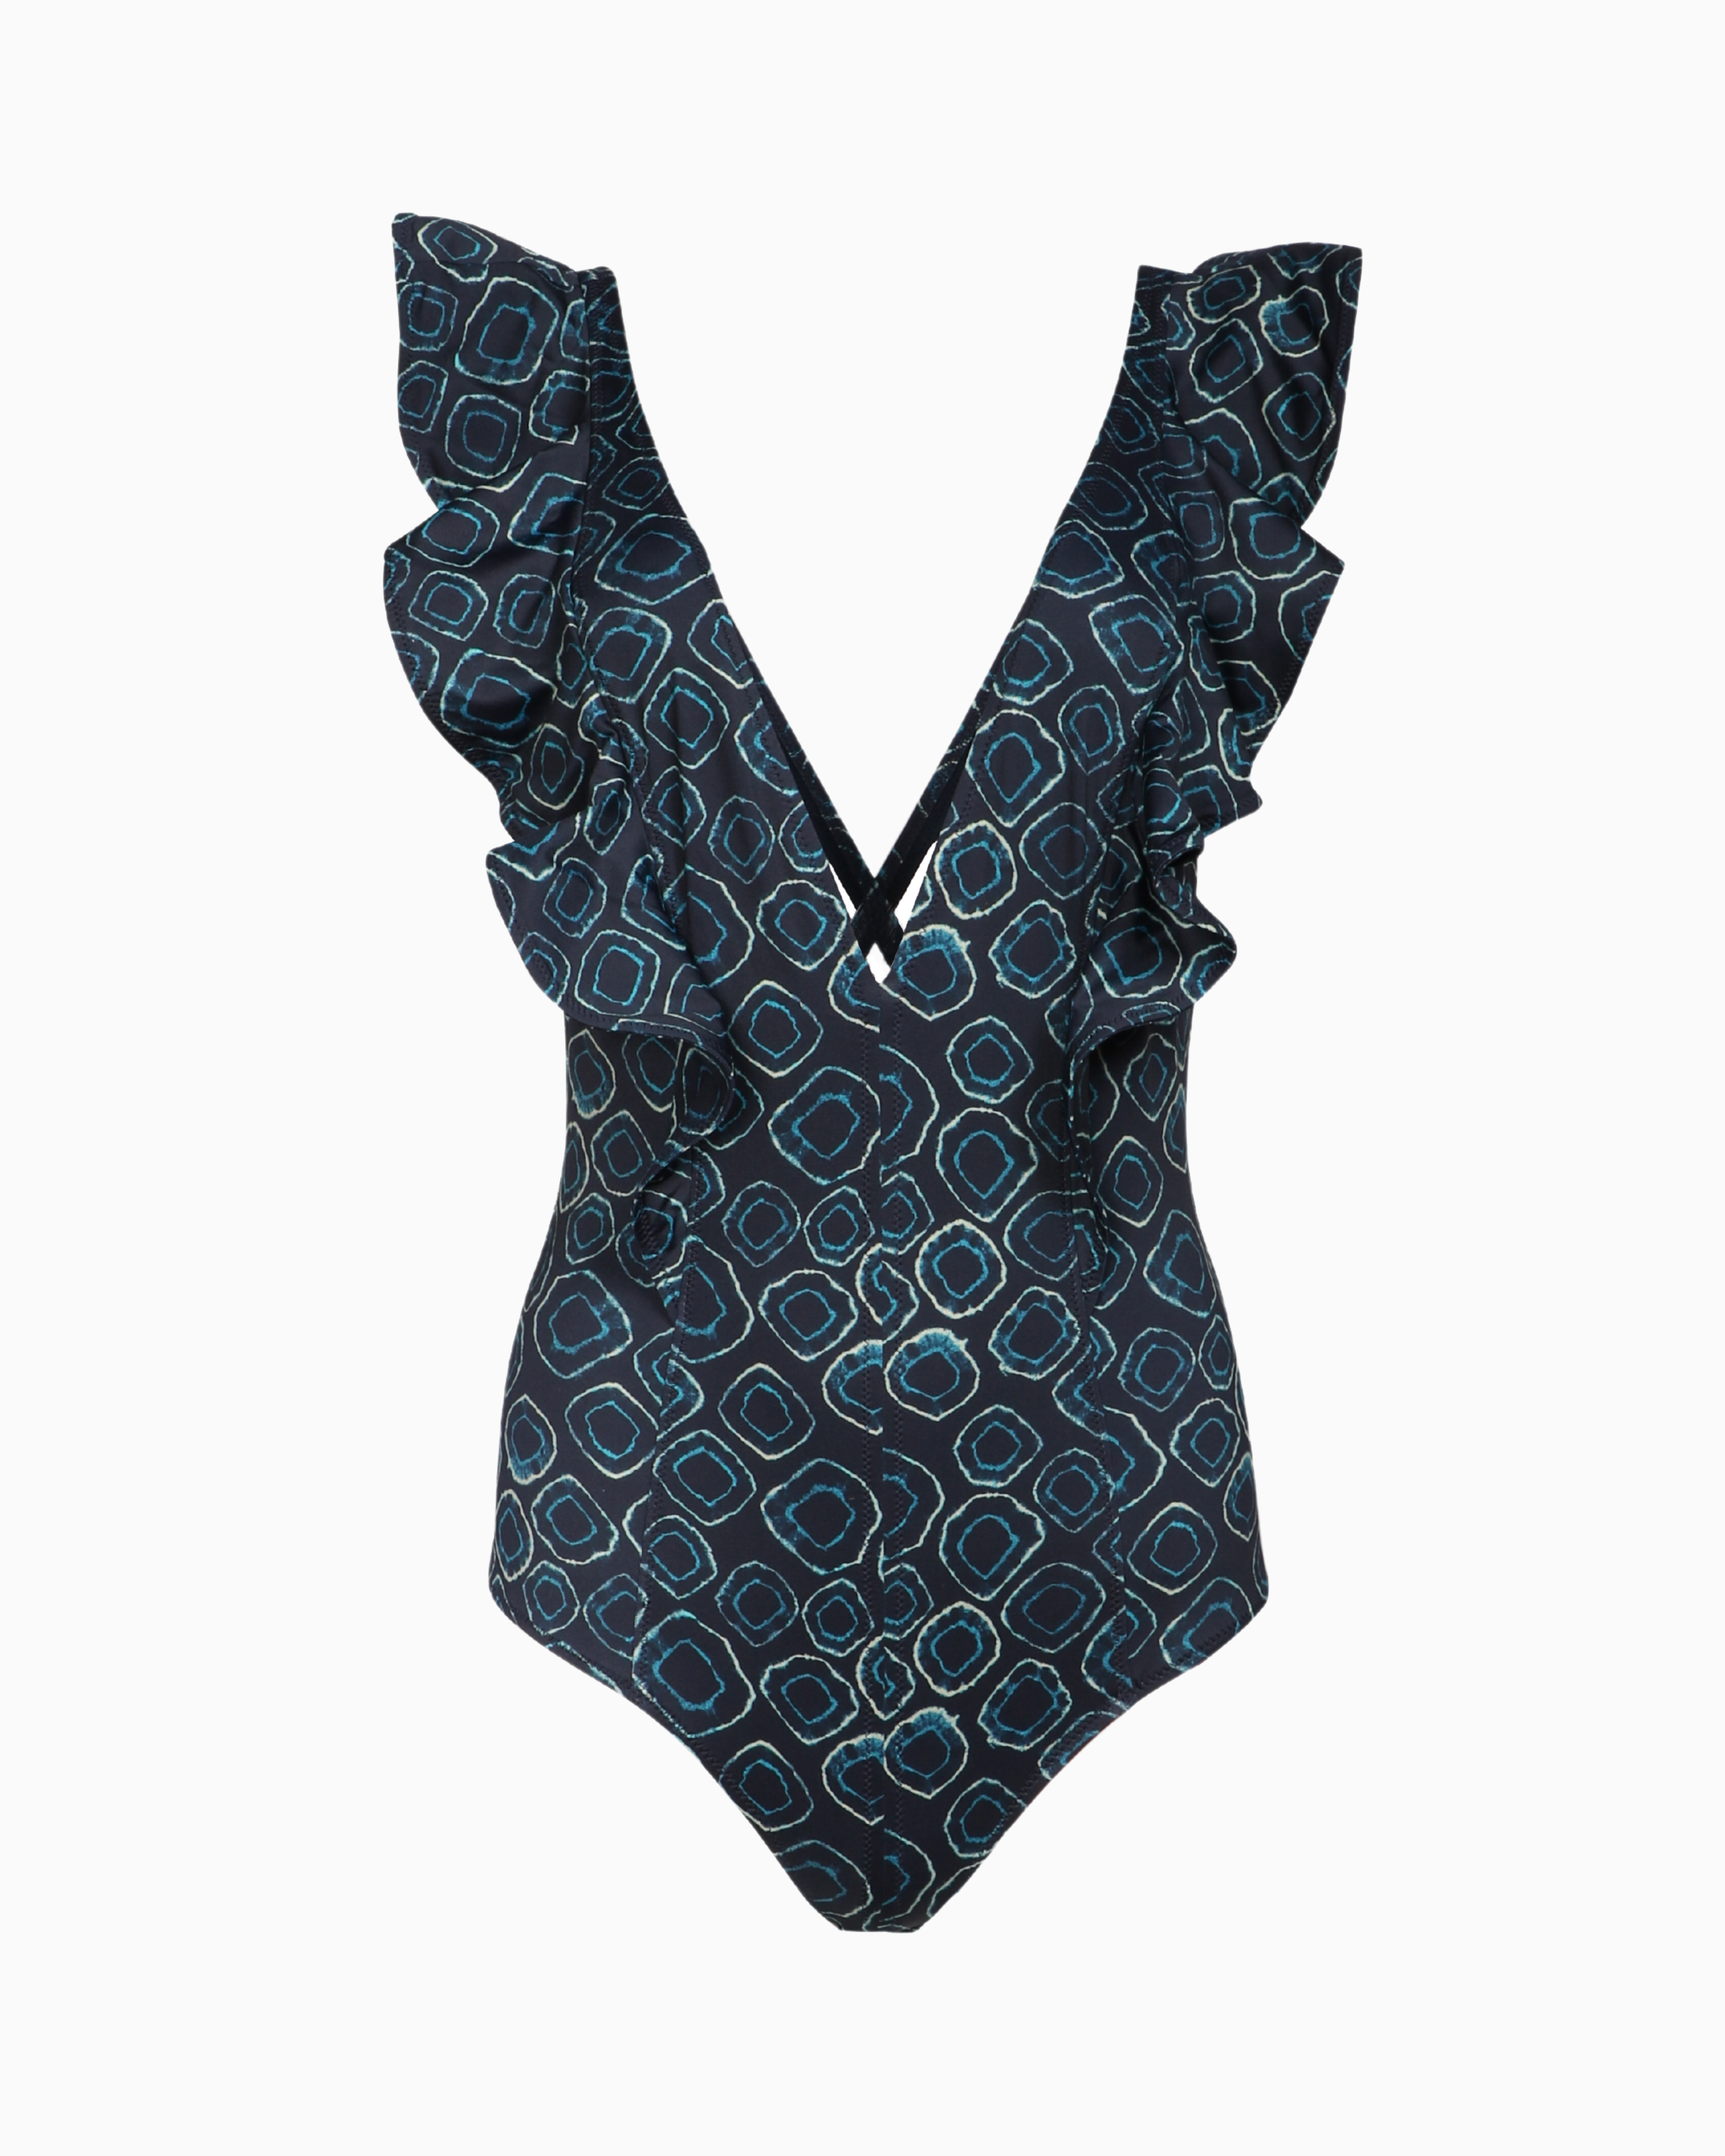 Ulla Johnson Evelina Maillot One Piece Swim Suit in Aquamarine